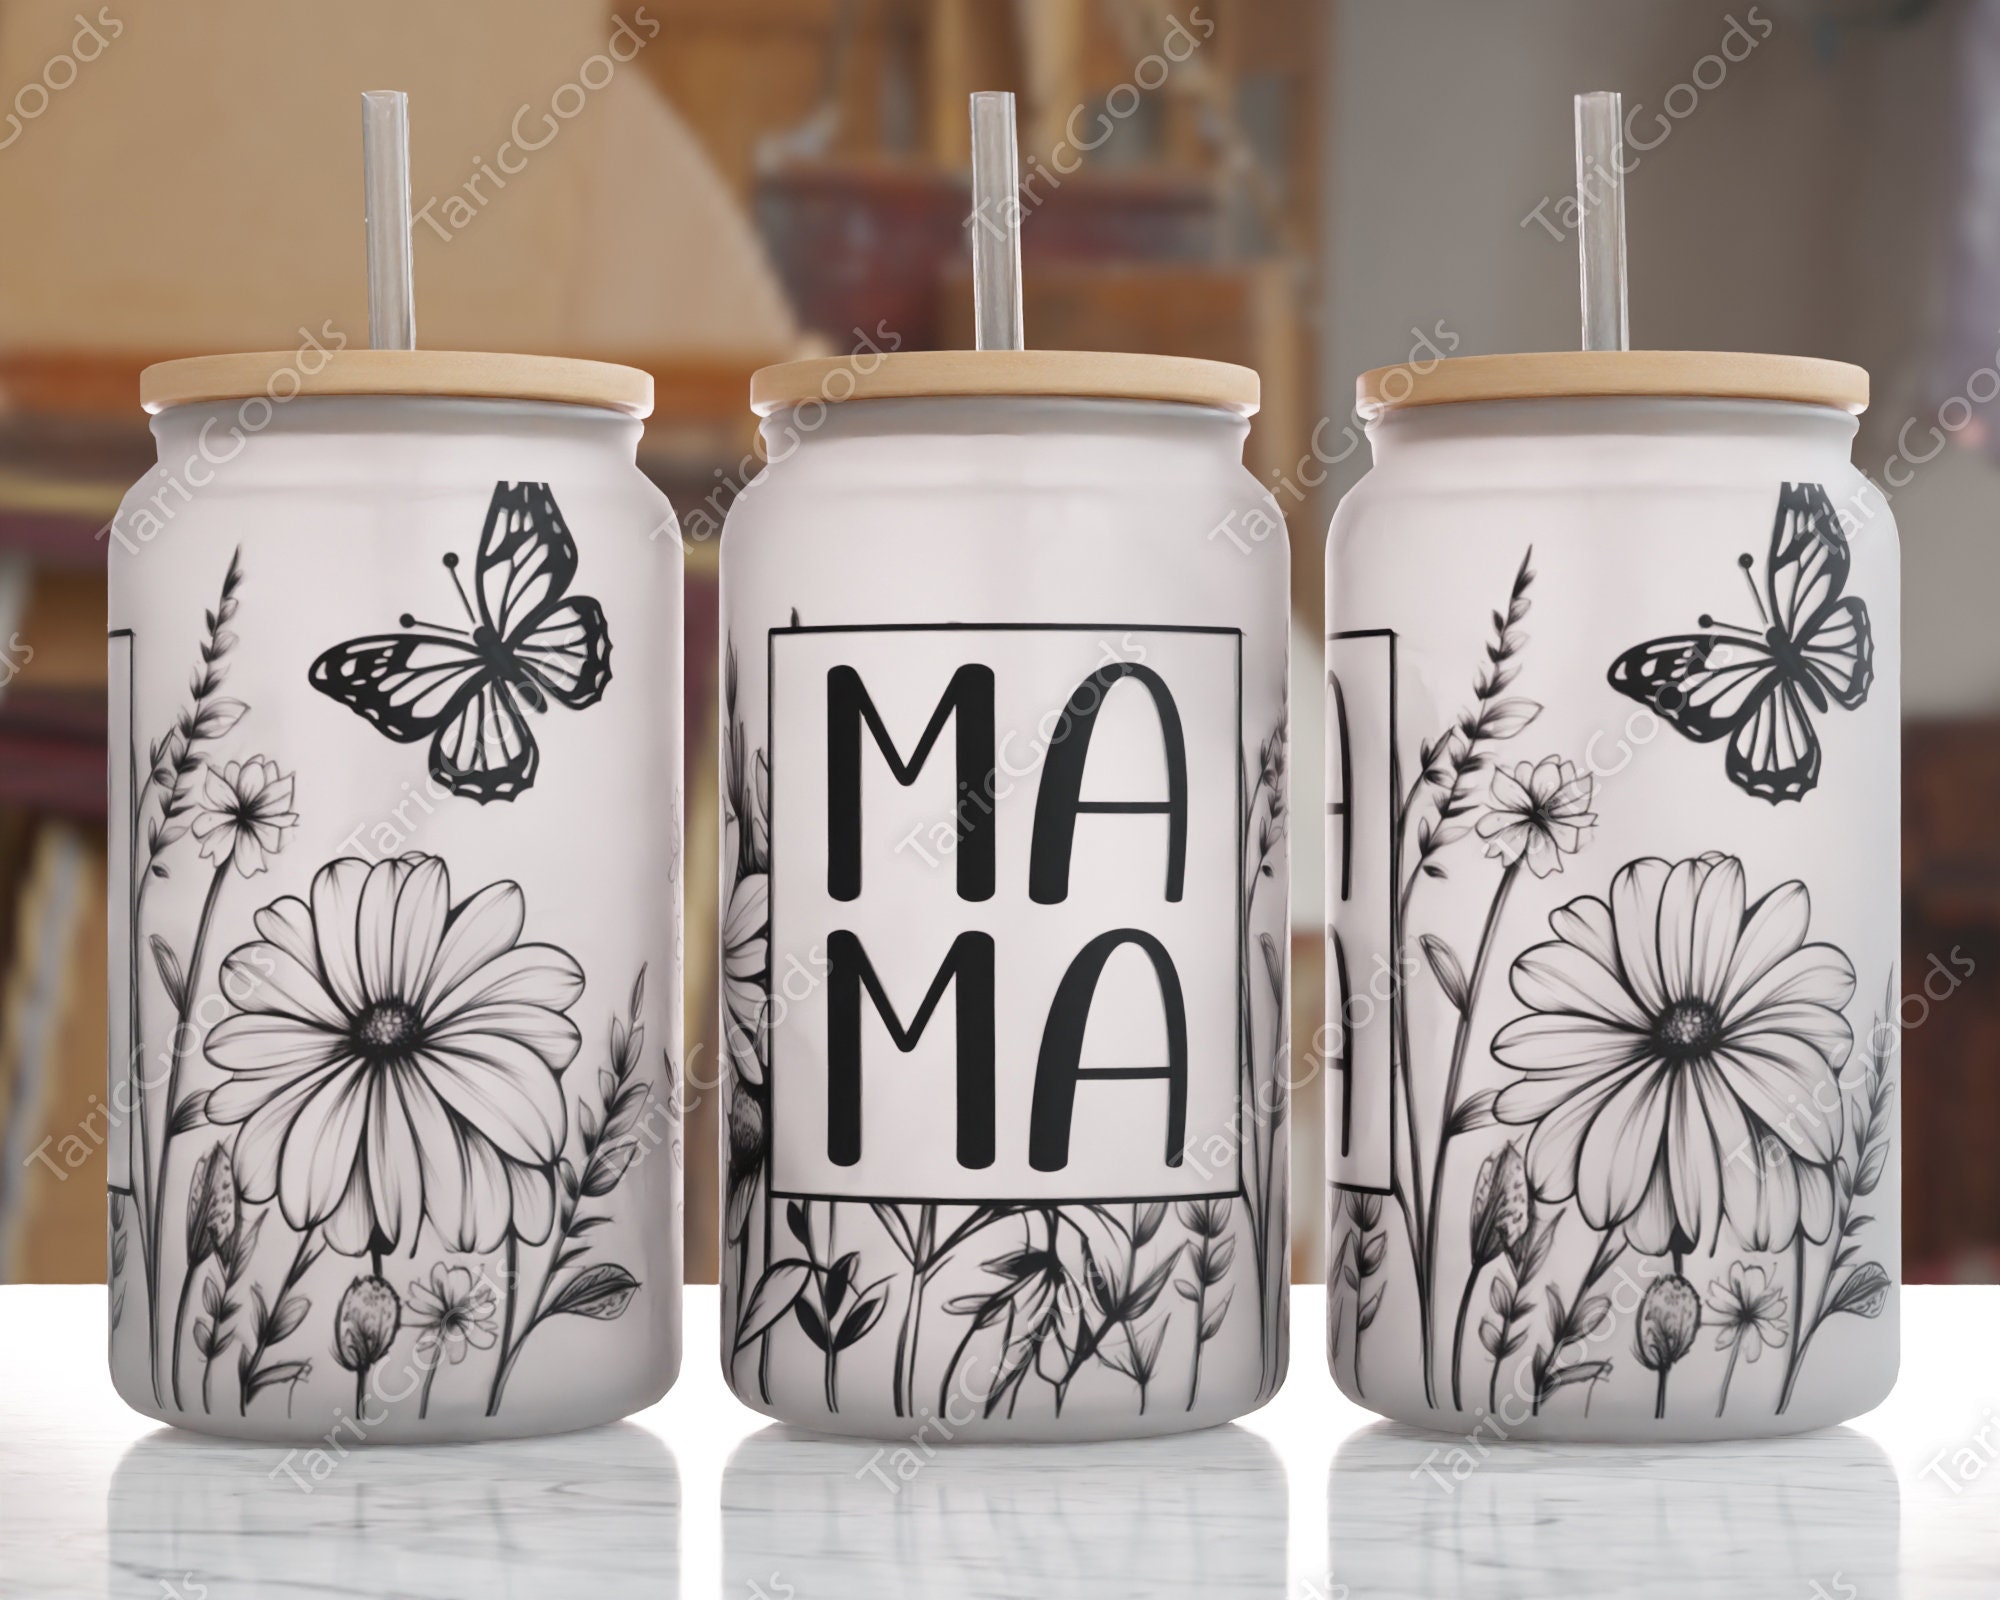 Mama Needs Coffee  Iced Coffee Beer Can Glass – Lila and Lula